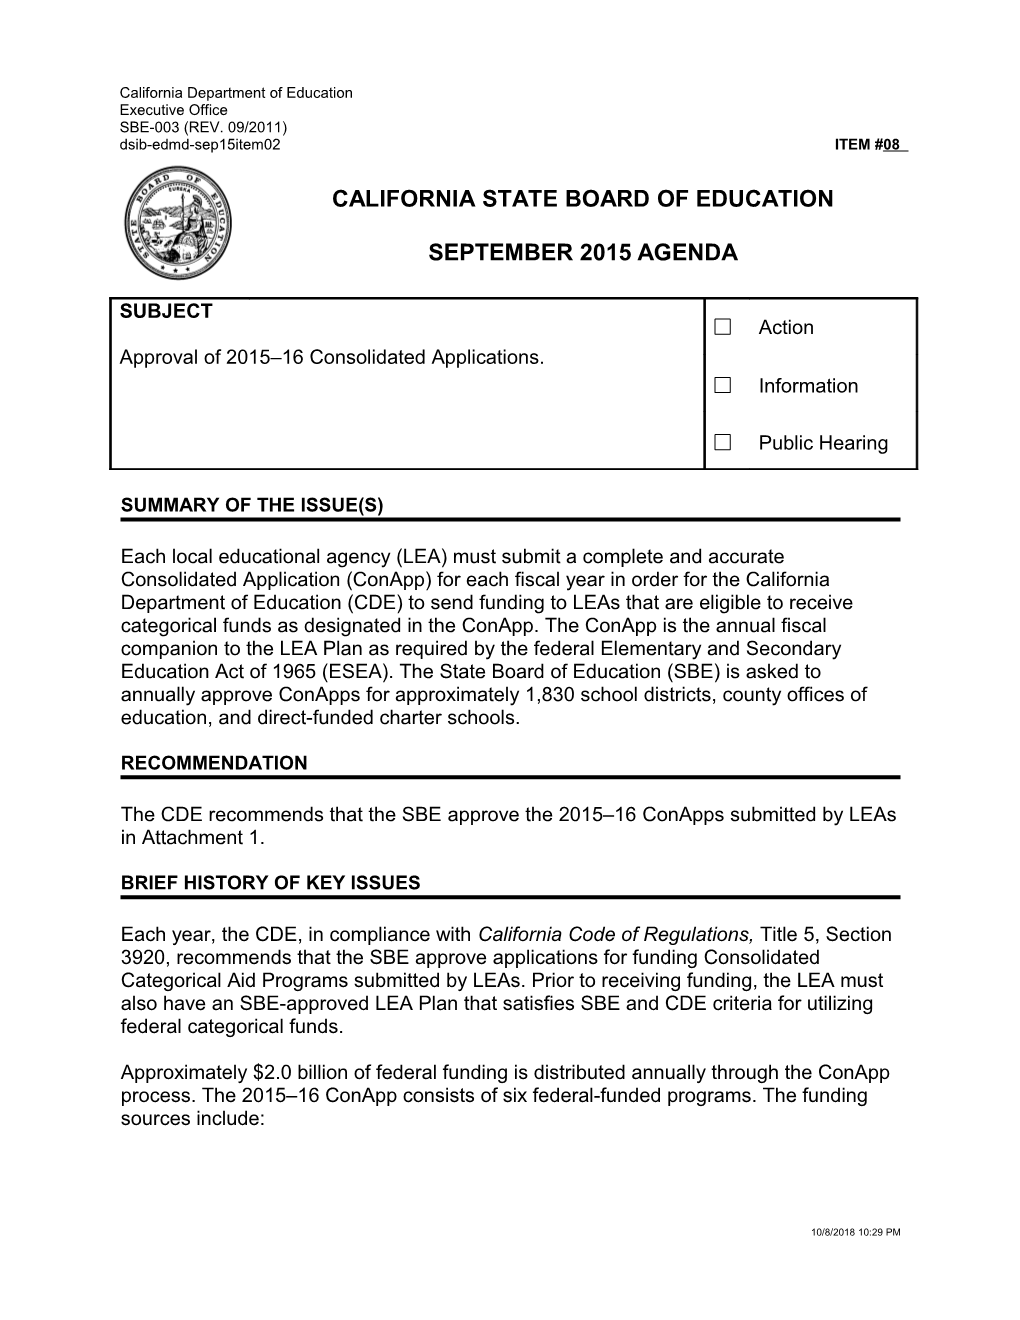 September 2015 Agenda Item 08 - Meeting Agendas (CA State Board of Education)